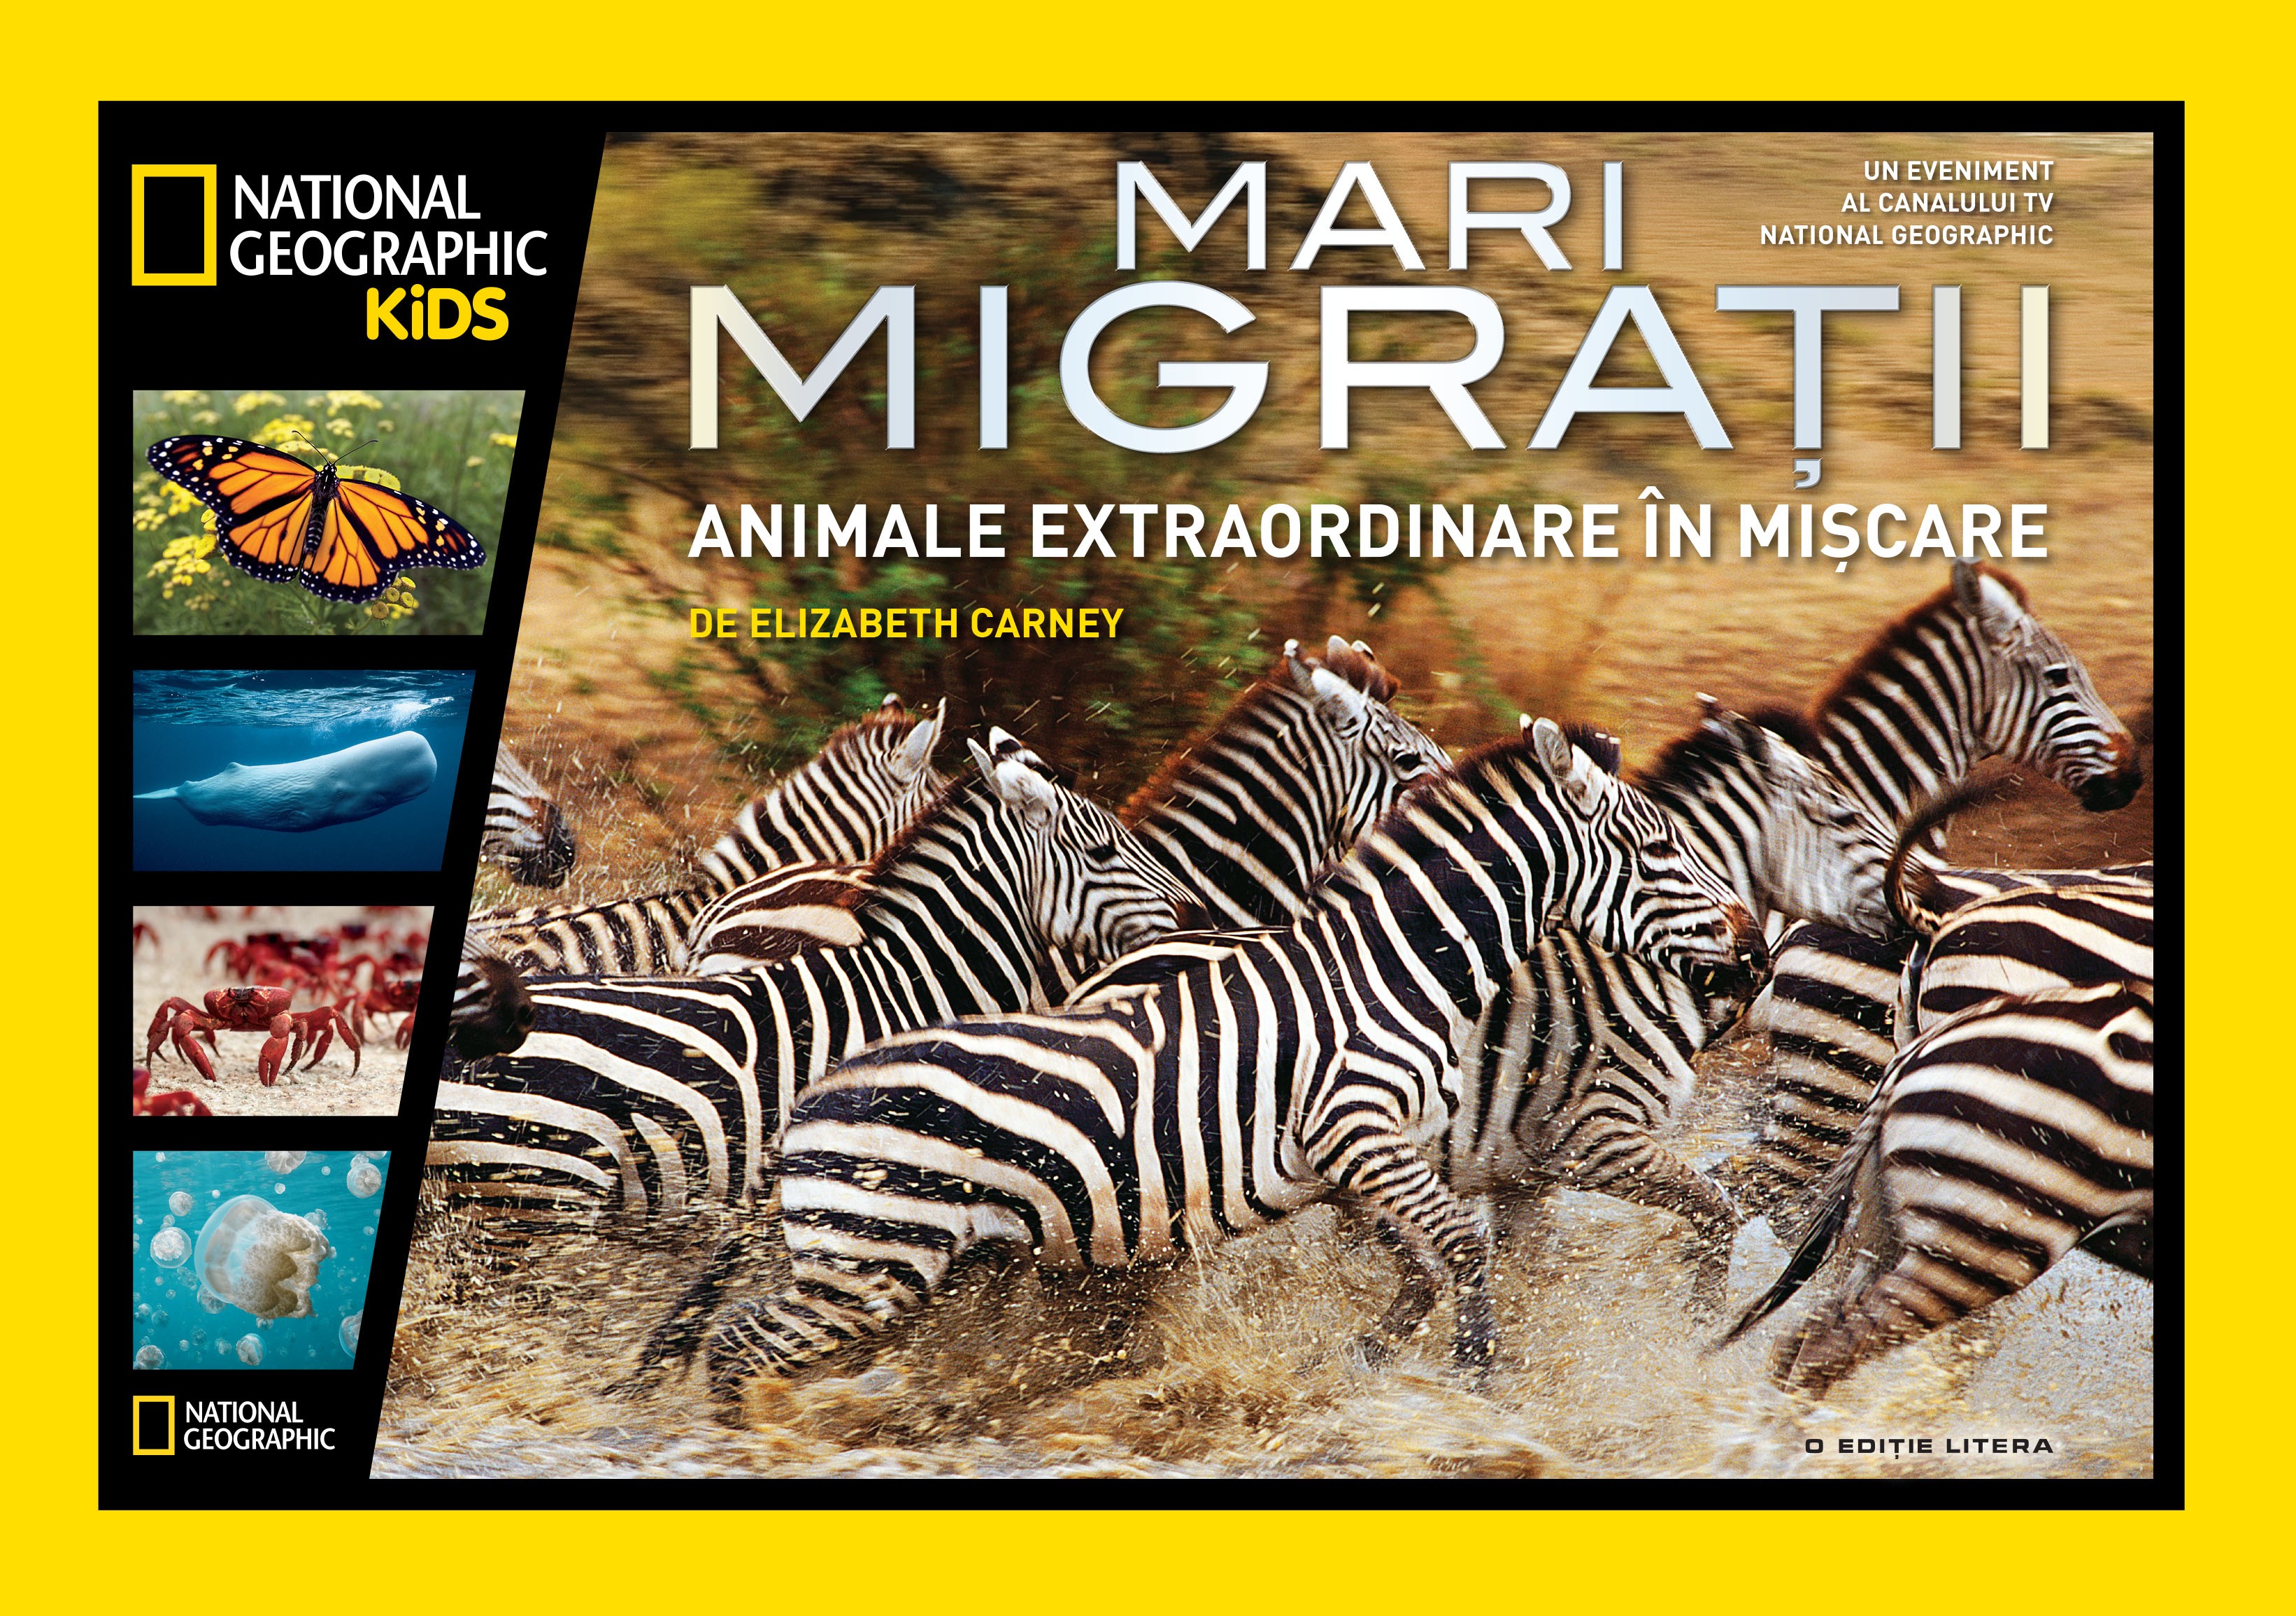 Mari migratii. Animale extraordinare in miscare - National Geographic Kids